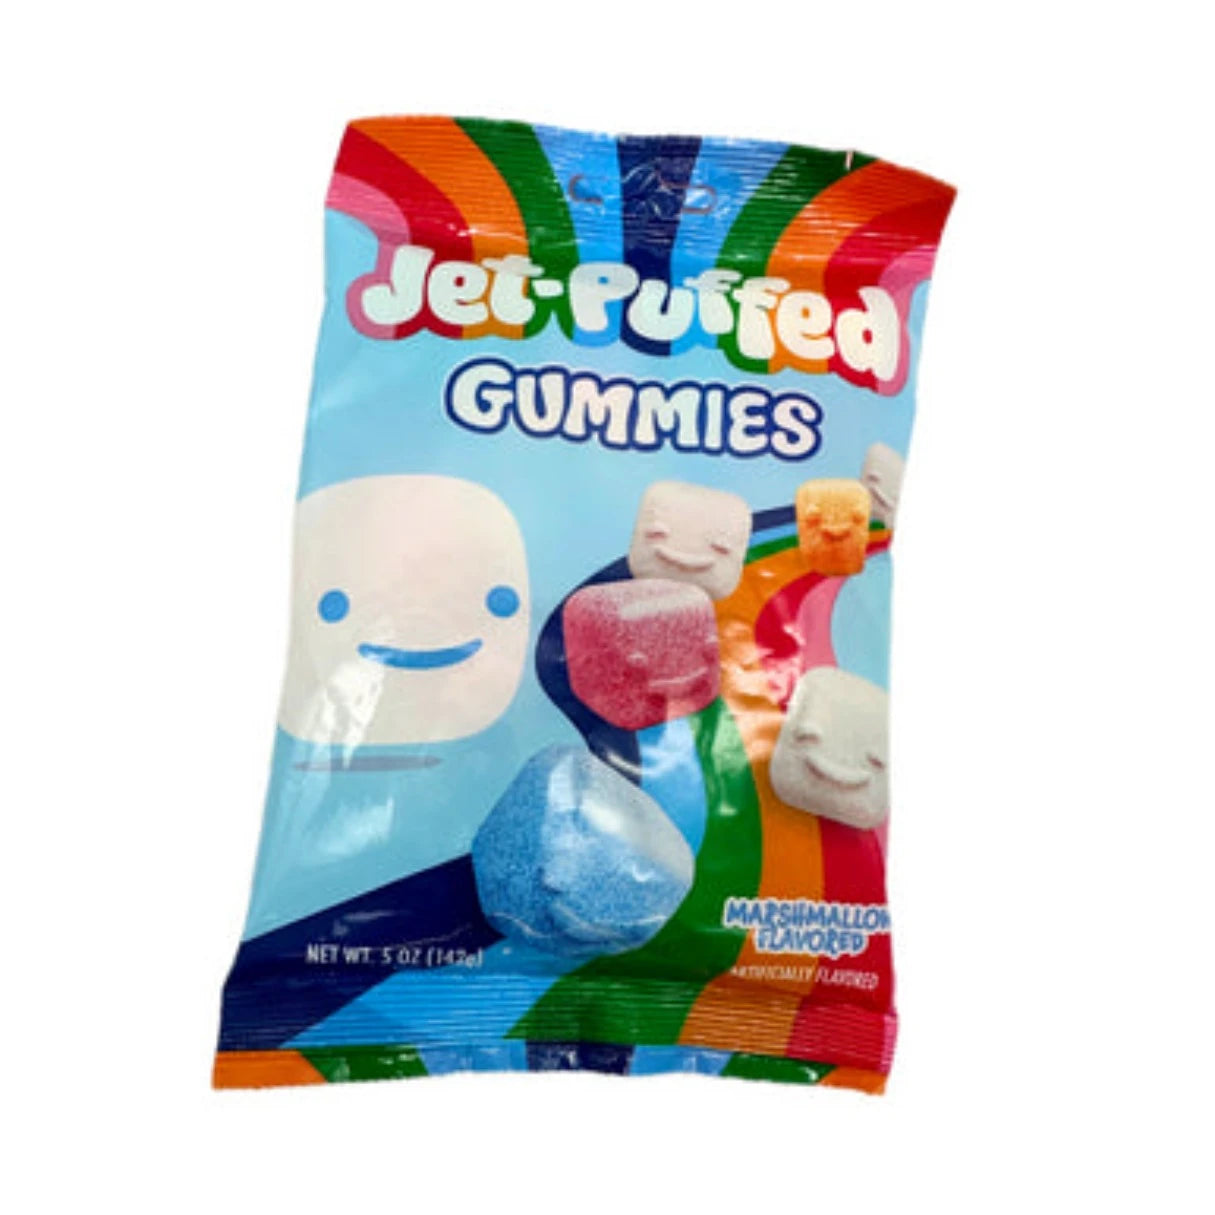 Jet-Puffed Marshmallow Flavored Gummies 5oz - 12ct